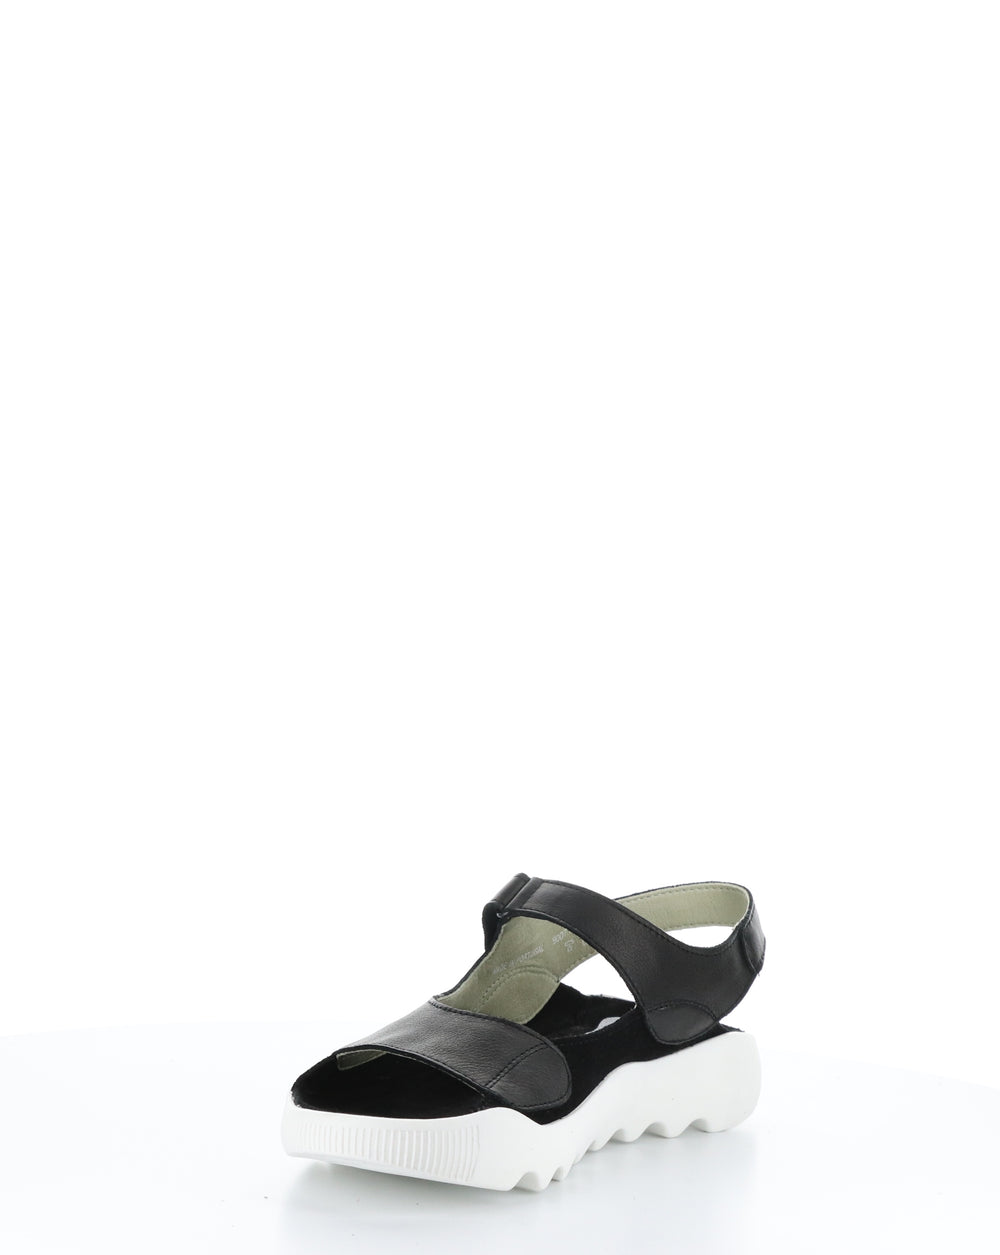 WEAL712SOF 000 BLACK Velcro Sandals